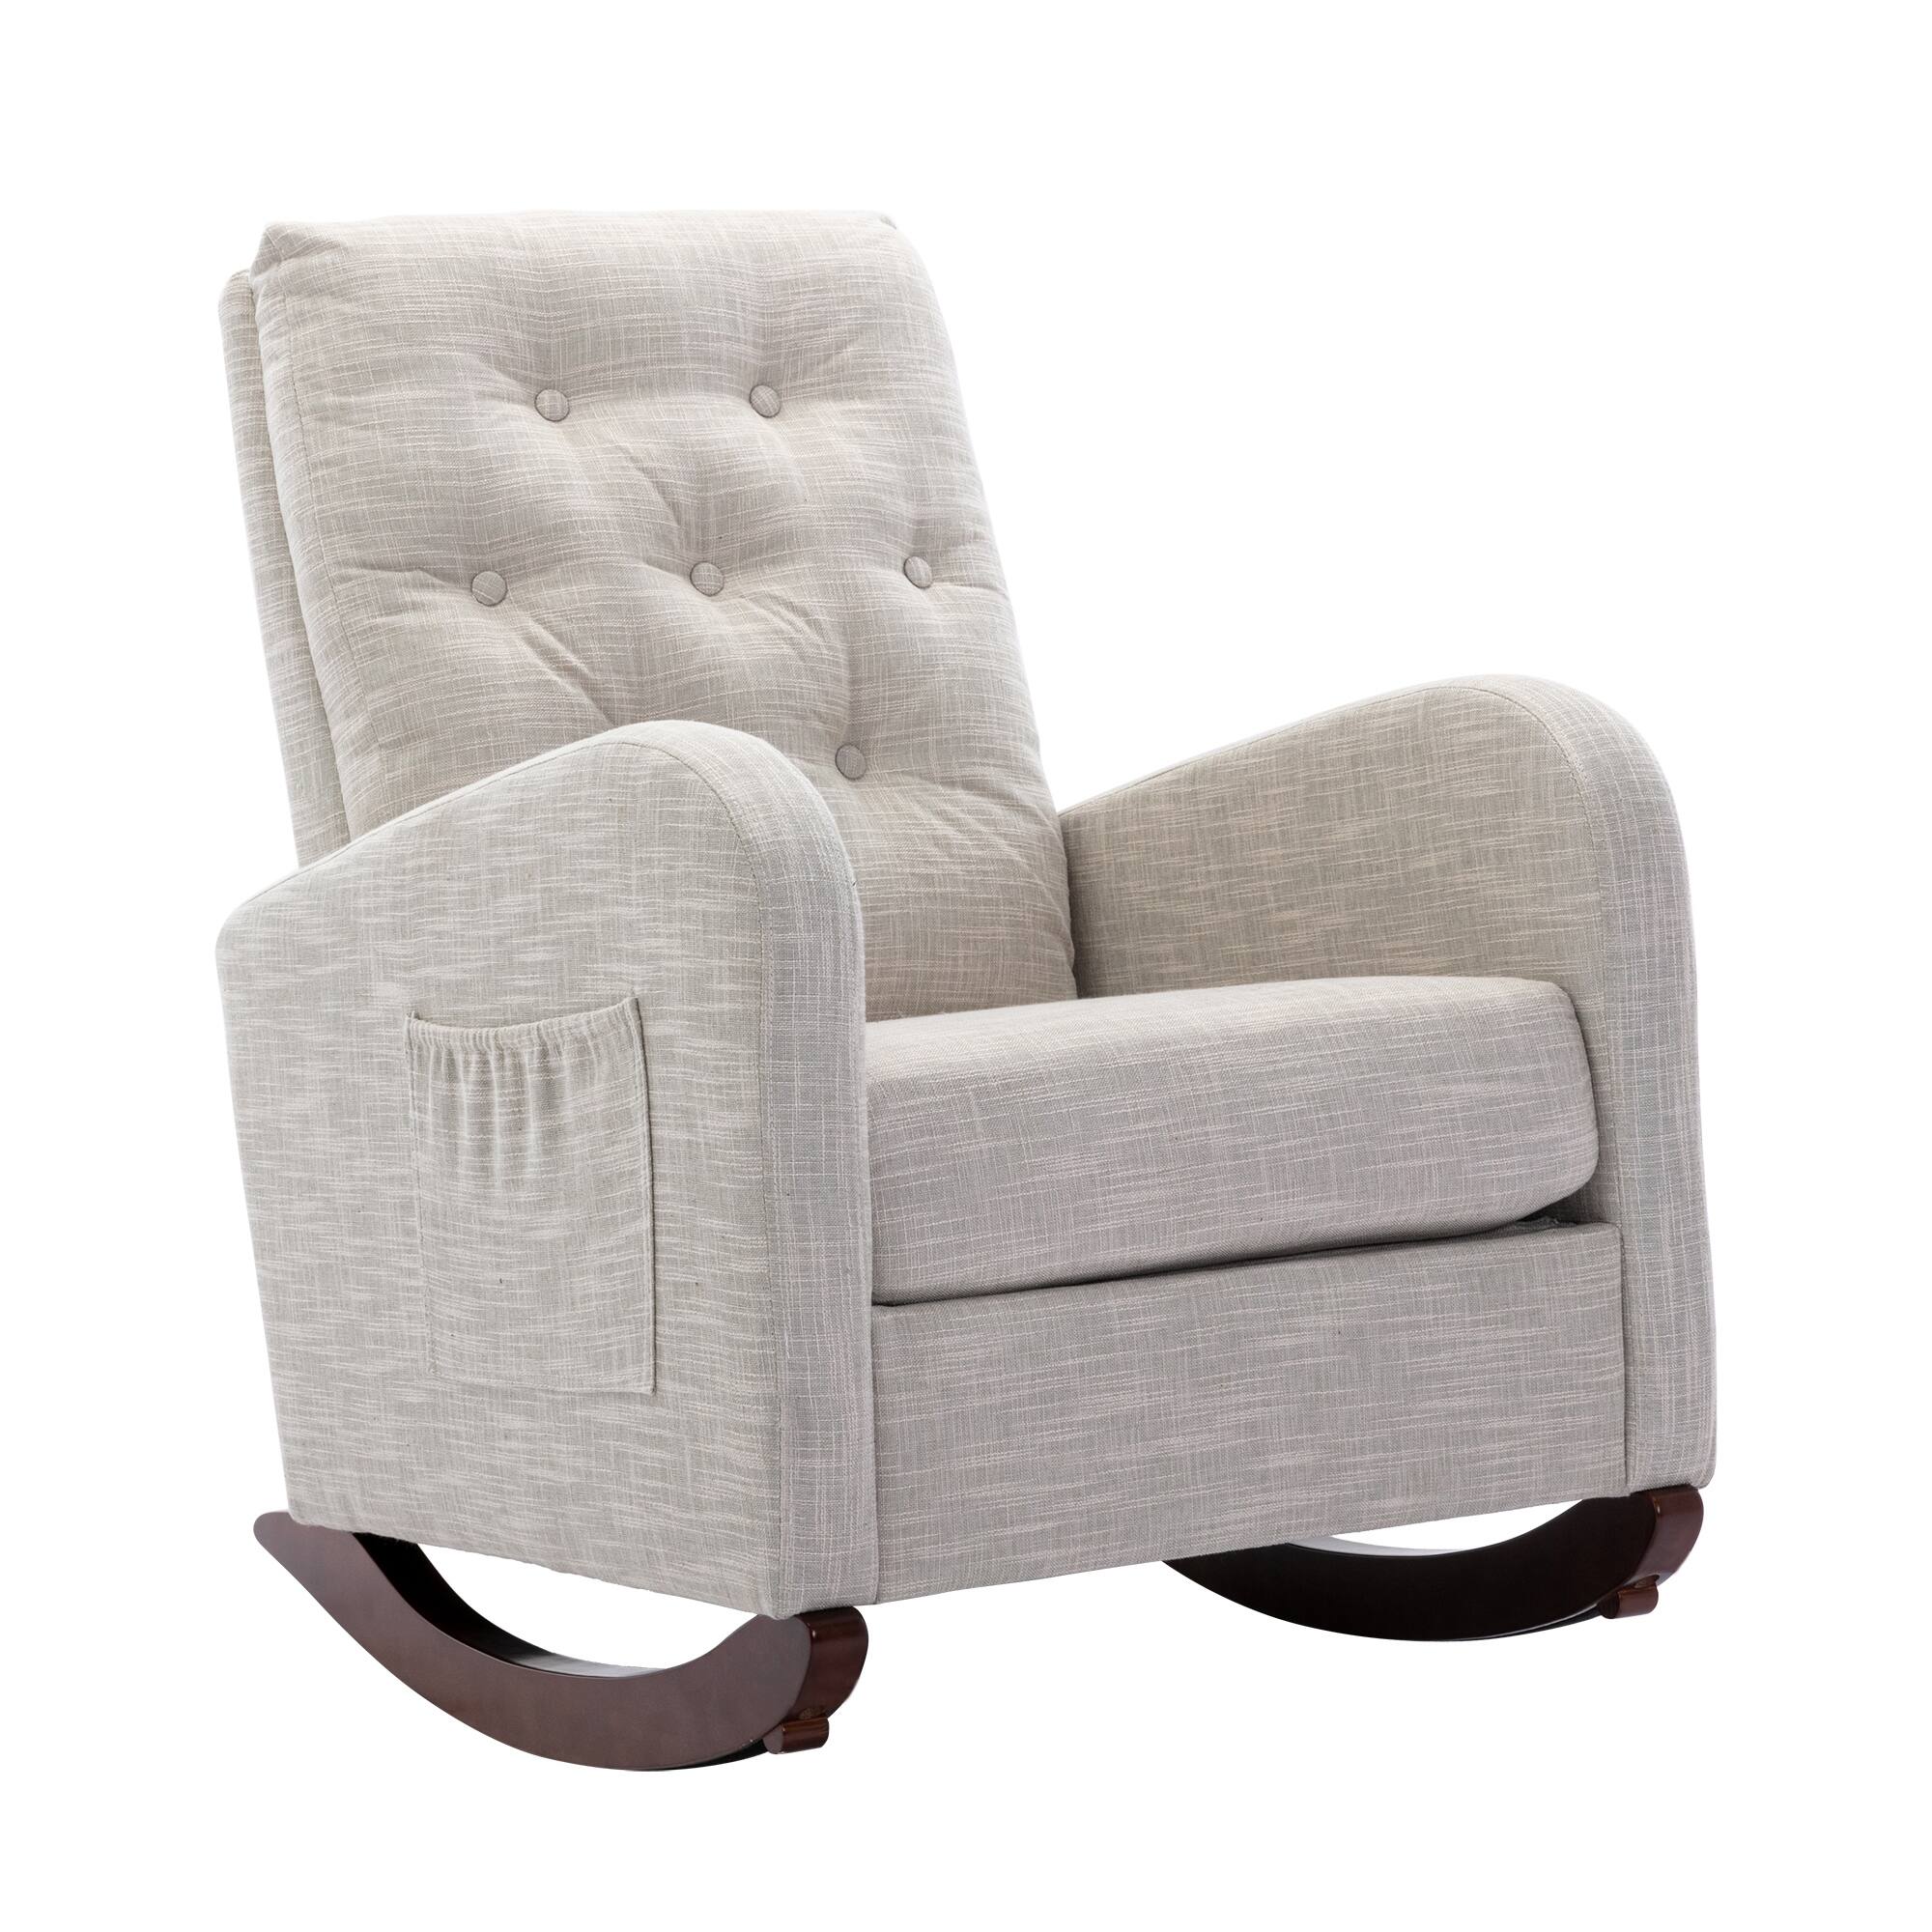 Mid-Century Modern Velvet Upholstered Nursery Rocking Chair with Tall Back and Armrests for Living Room, Light Grey